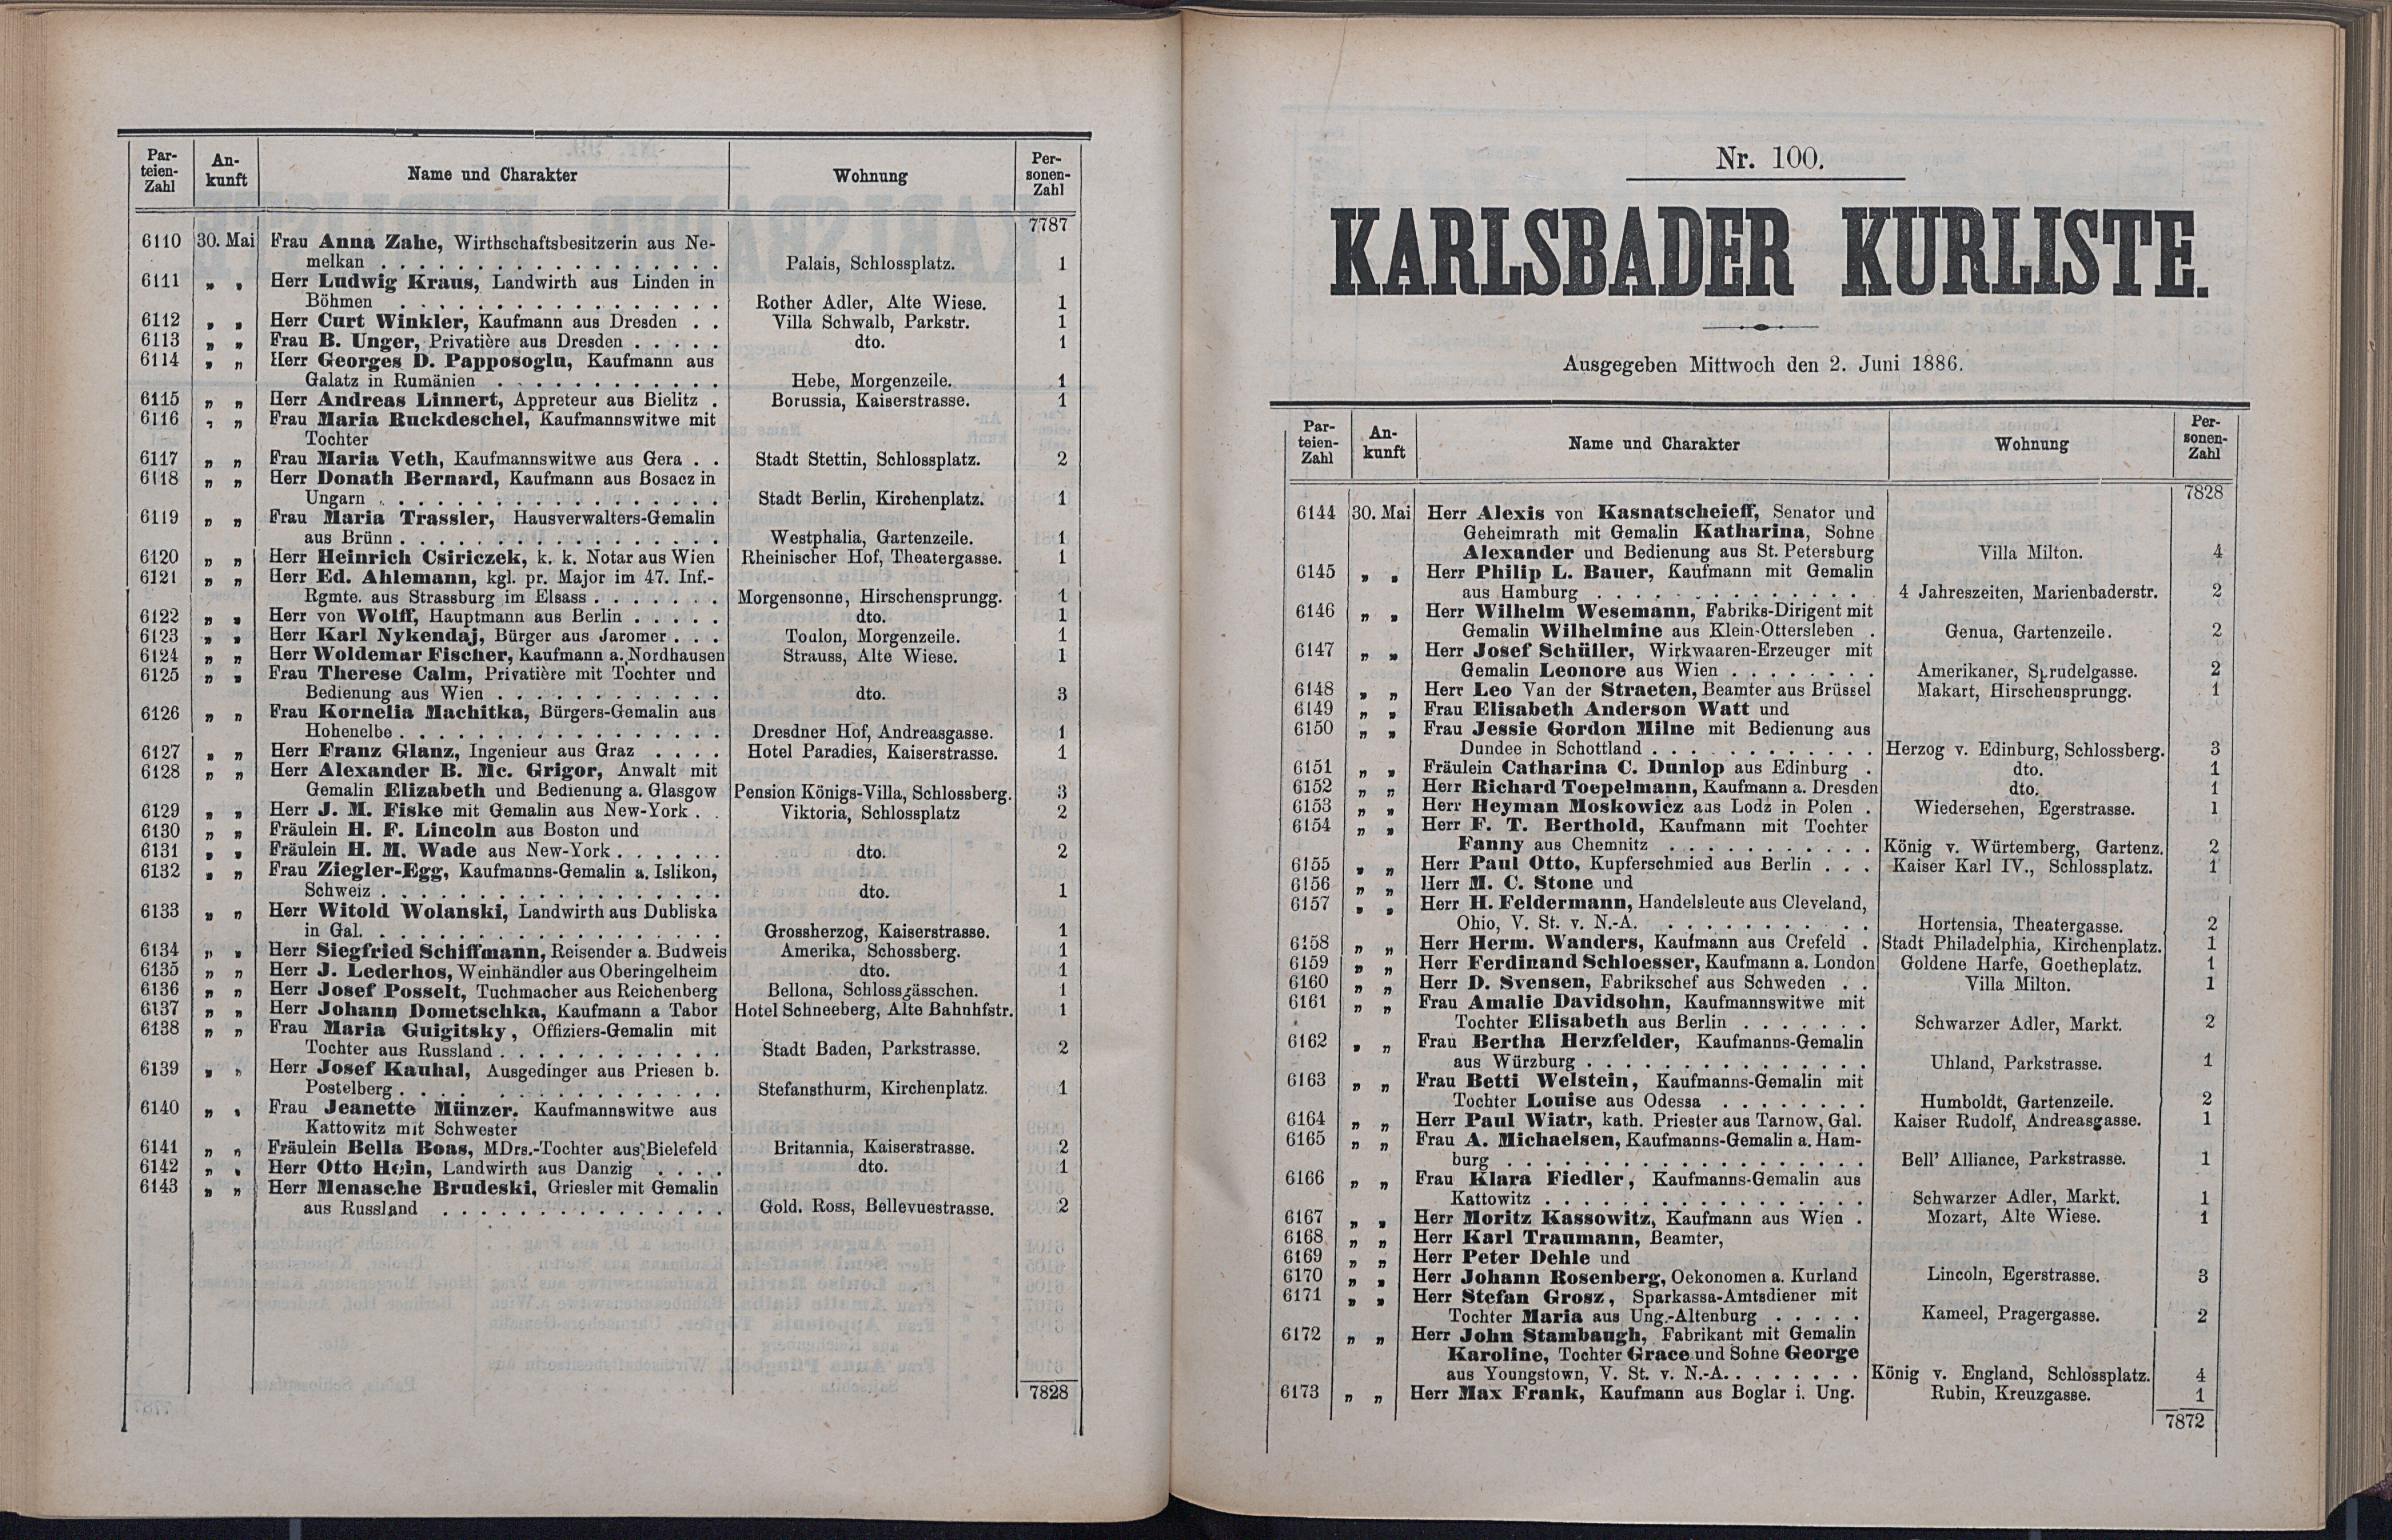 154. soap-kv_knihovna_karlsbader-kurliste-1886_1550